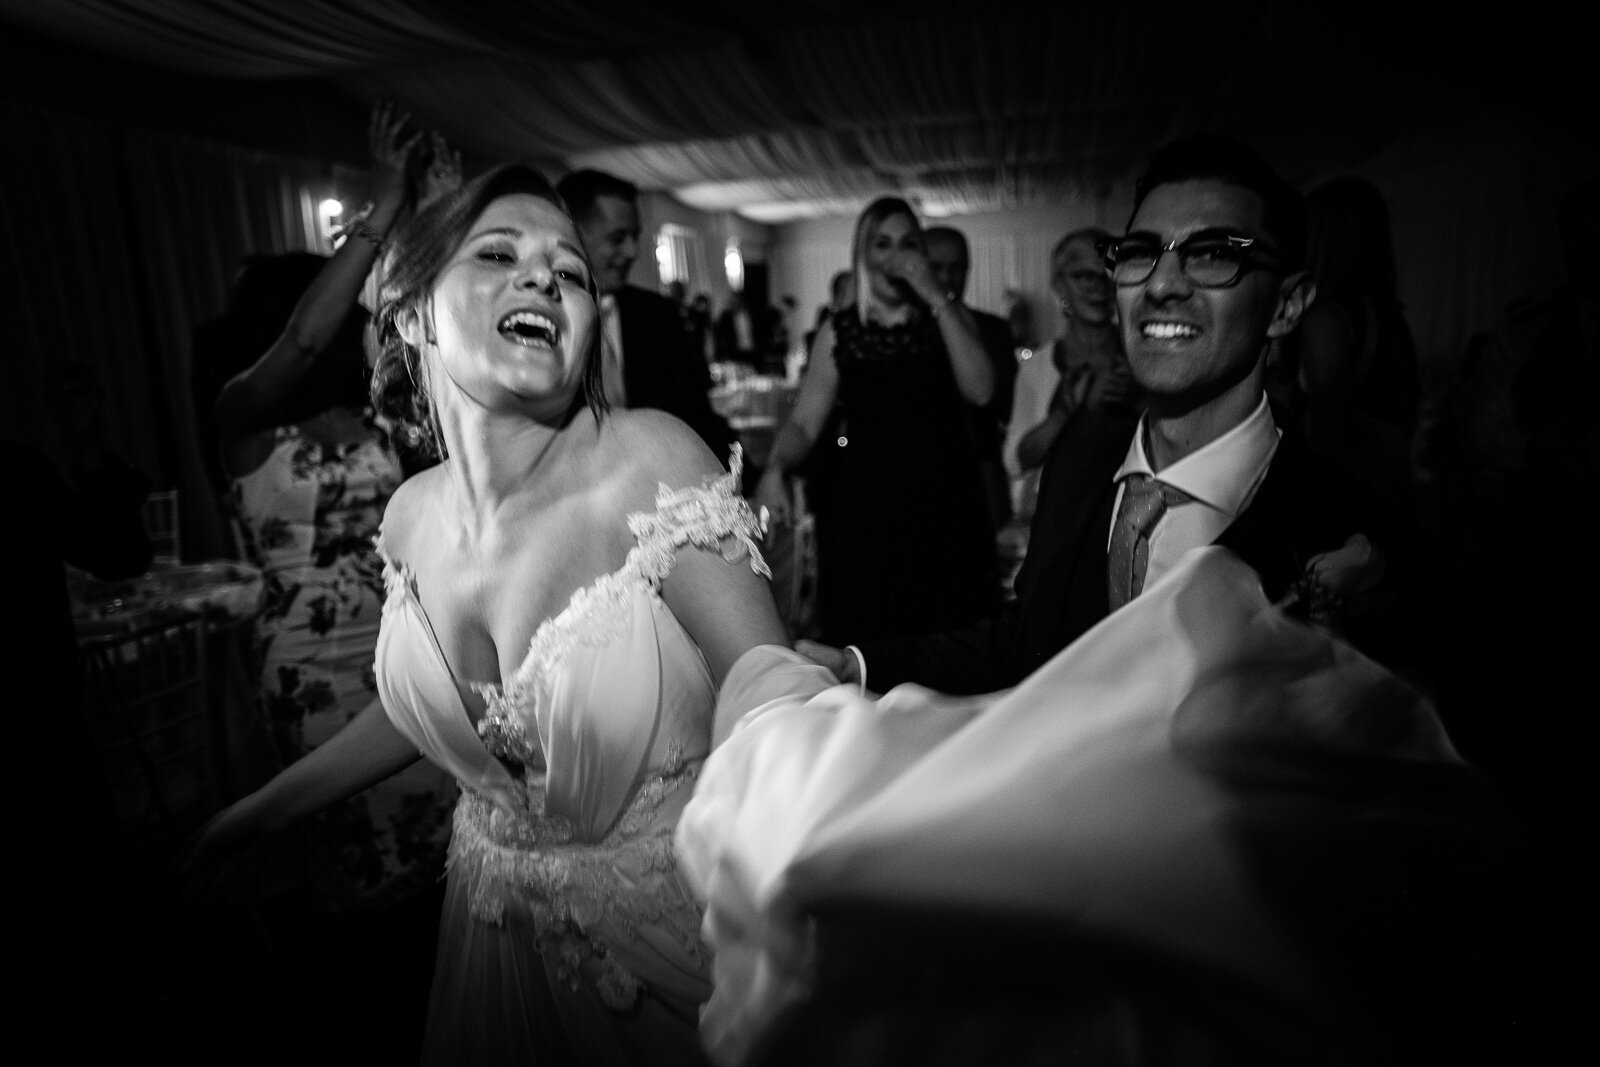 00018-Fotografo-Matrimonio-VicoEquense-fotografo-Sorrento-Napoli-Wedding-Amalfi-Coast-Photographer-VincentAiello.jpg